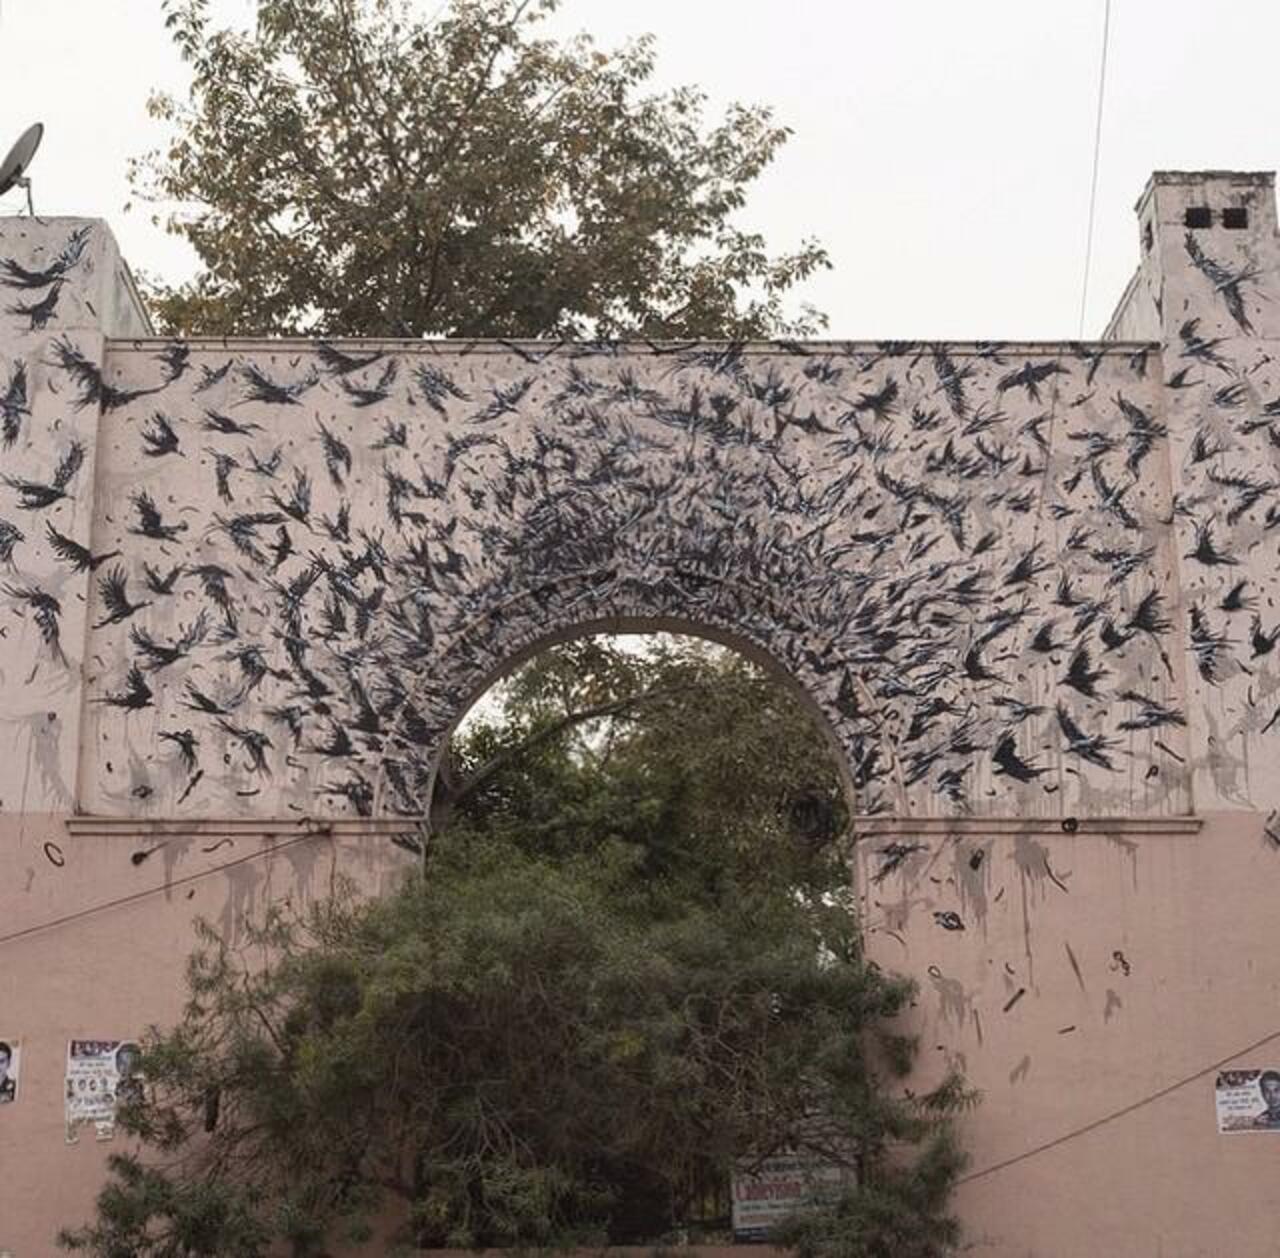 “@GoogleStreetArt: When Street Art meets Nature by DALeast in Delhi, India 

#art #arte #graffiti #streetart http://t.co/egAa7UScSW”